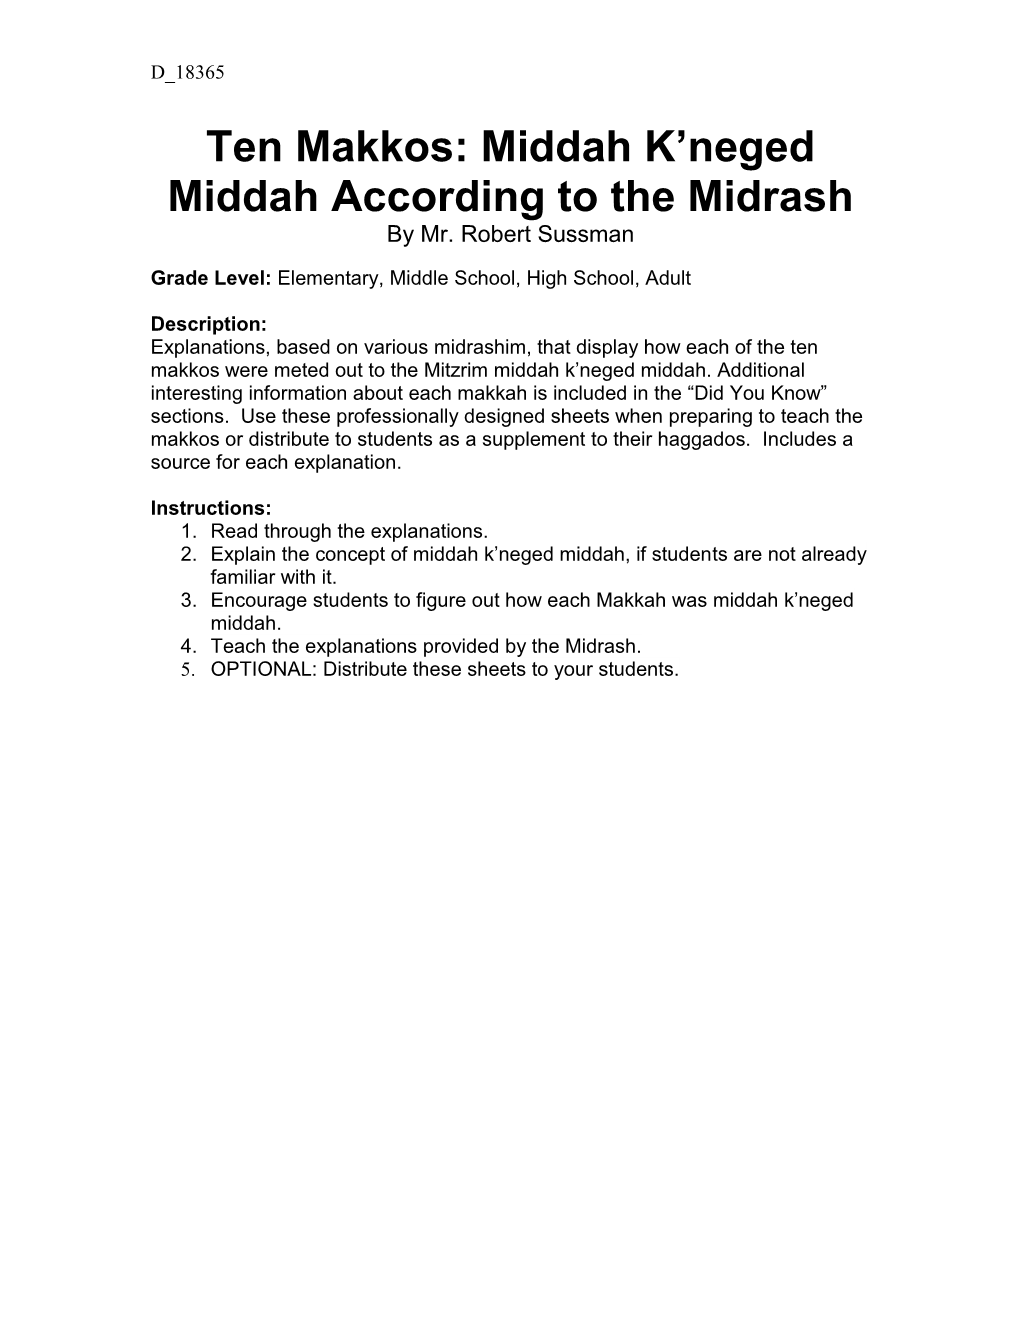 Ten Makkos: Middah K'neged Middah According to the Midrash